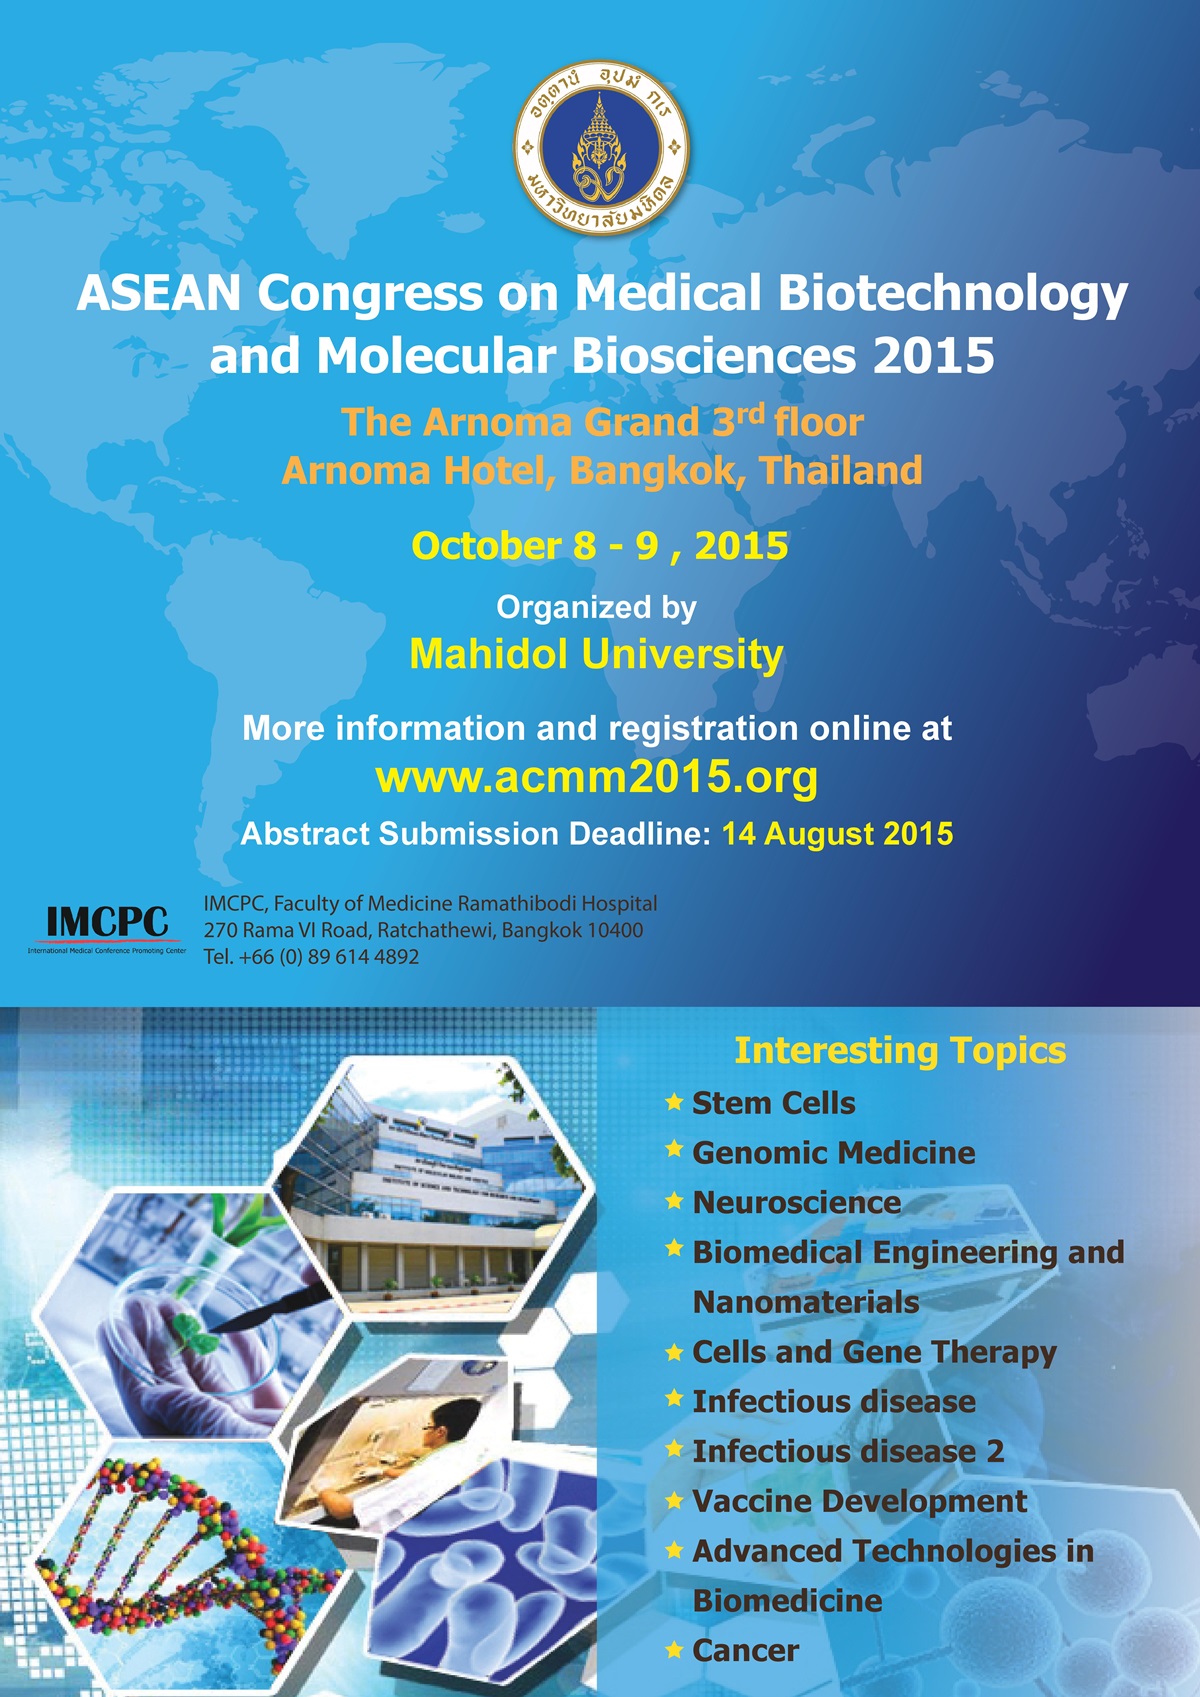 ASEAN Congress on Medical Biotechnology and Molecular Biosciences 2015